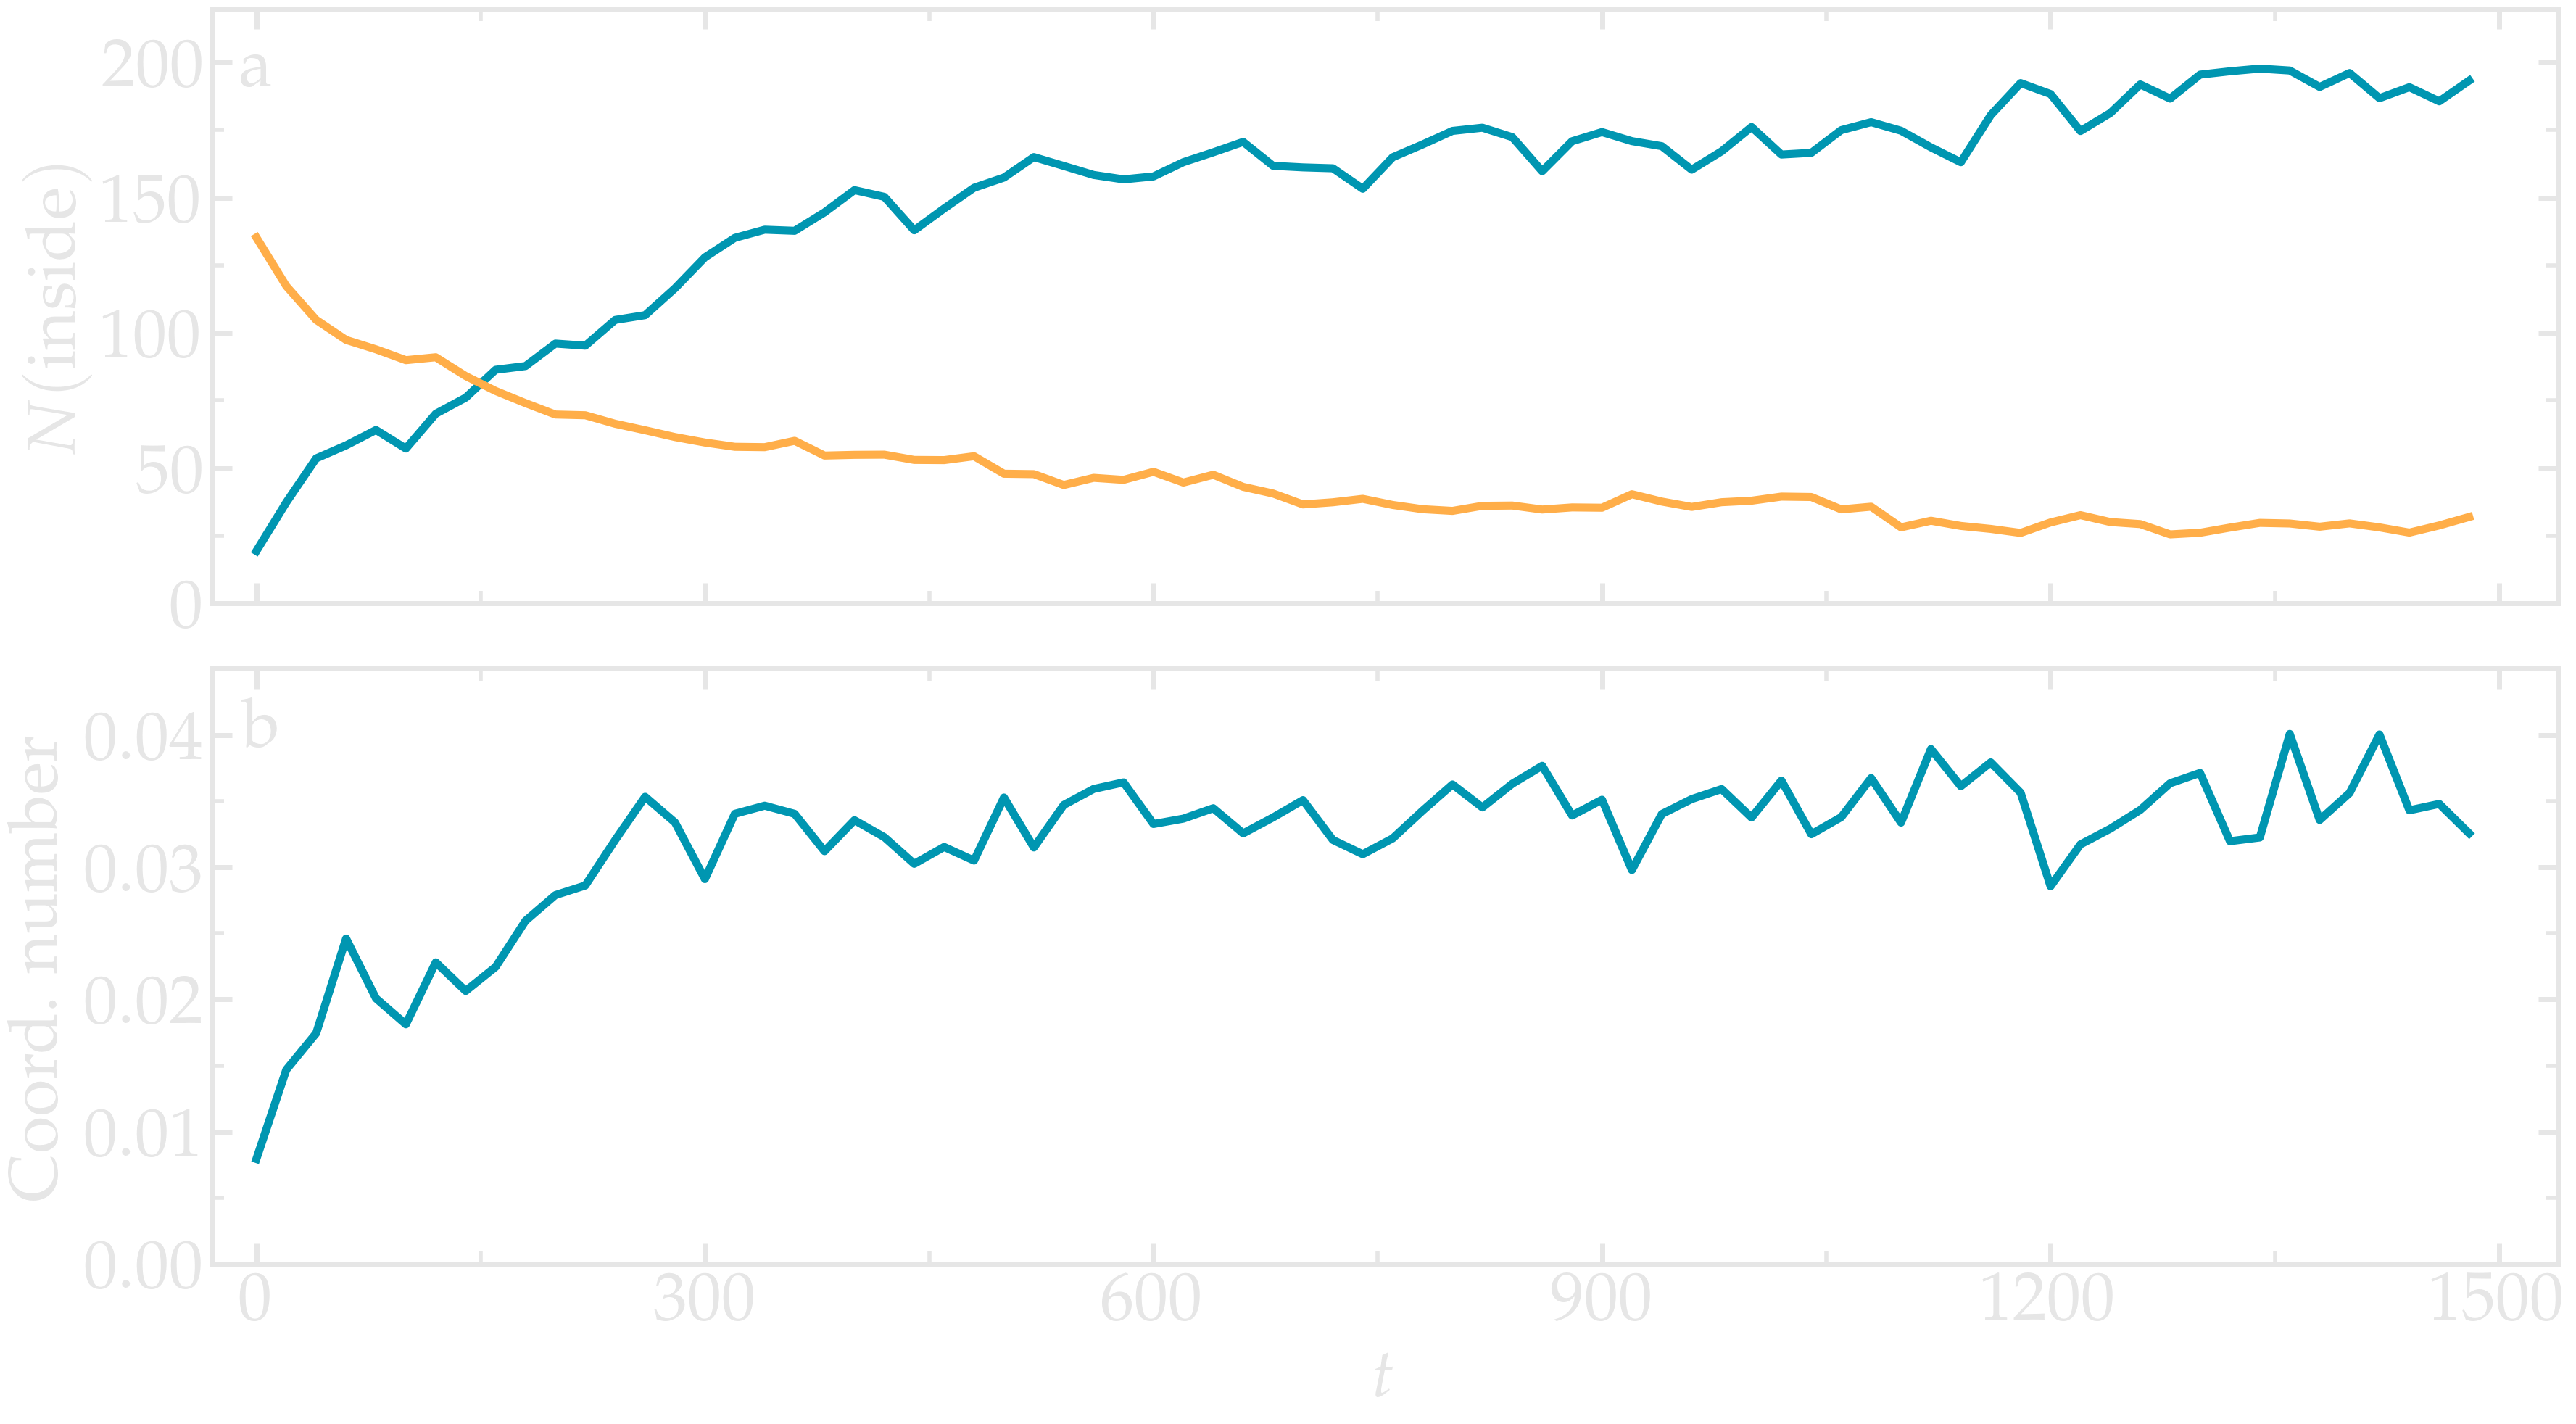 Result tutorial molecular dynamics simulation: Energy plot over time